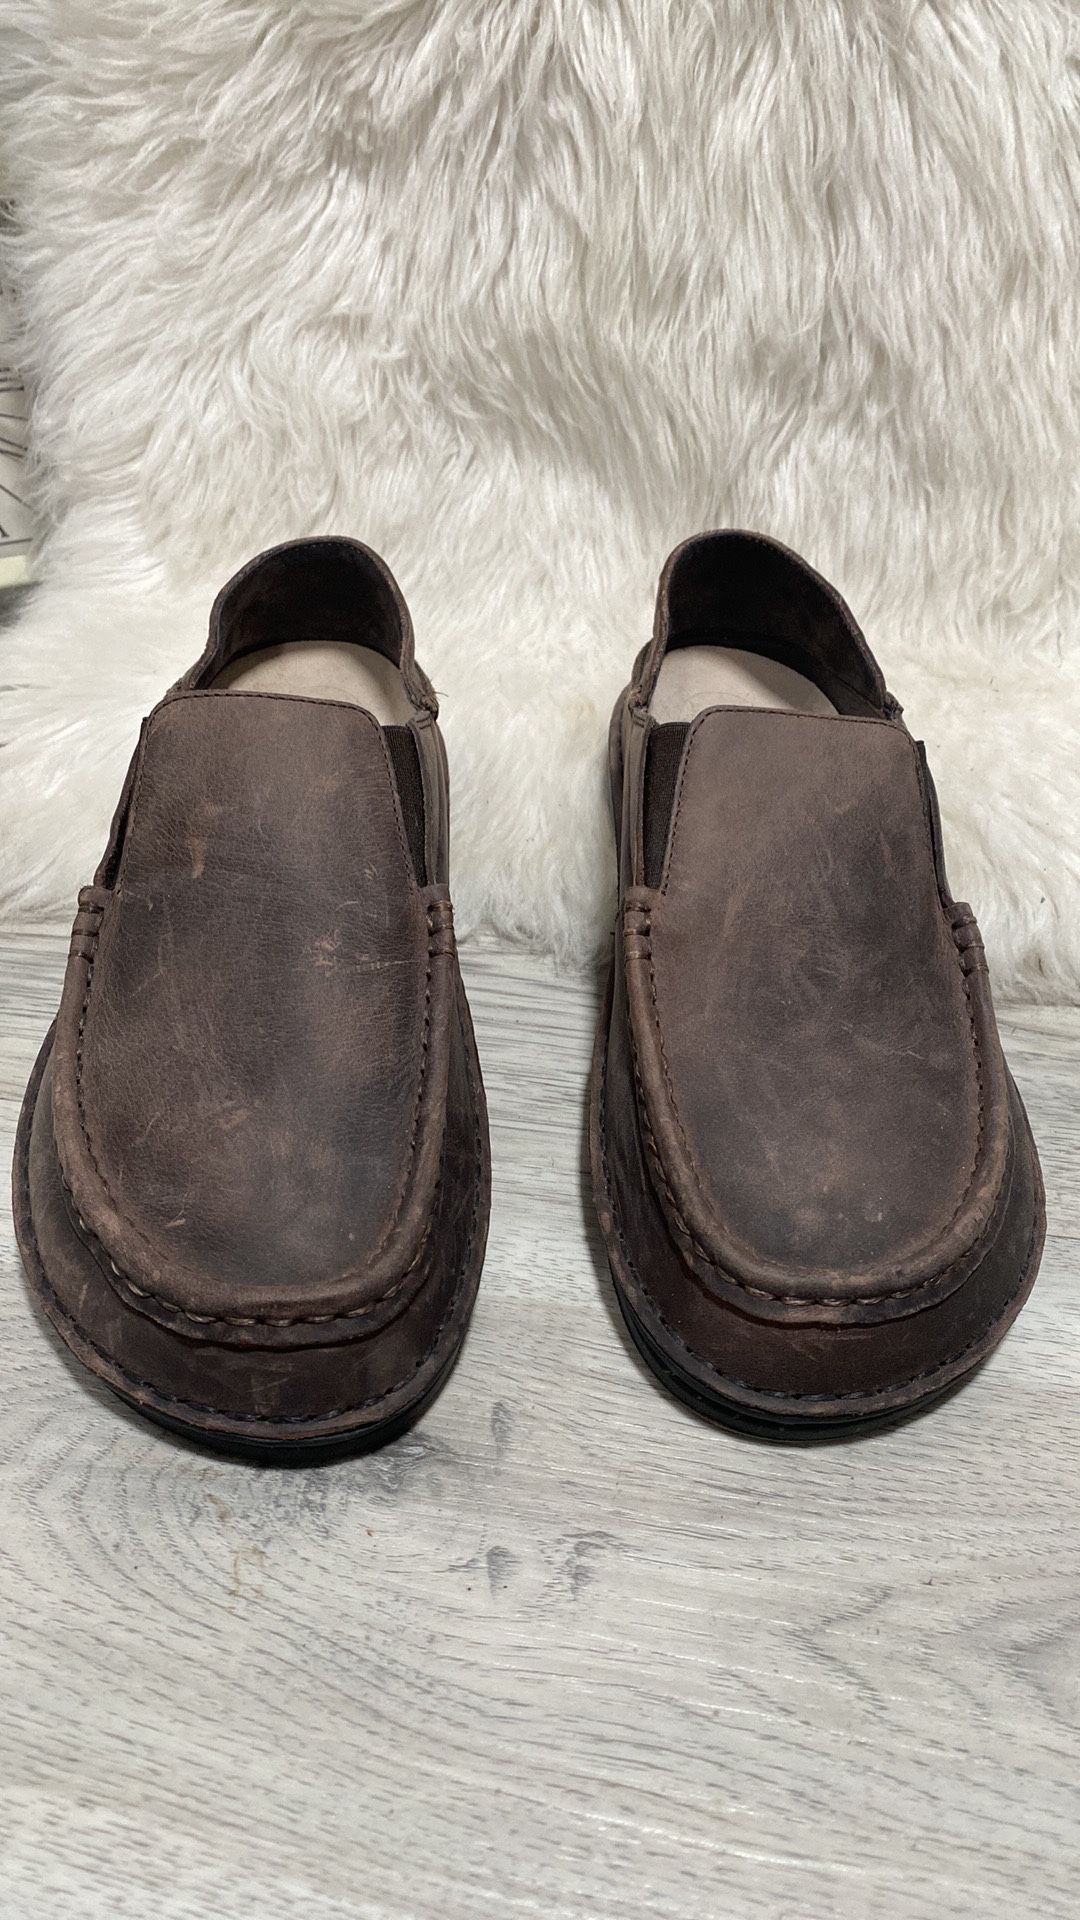 New Birkenstock Mens Duma Oiled Brown Leather Slip On SZ 8 Originally $150 